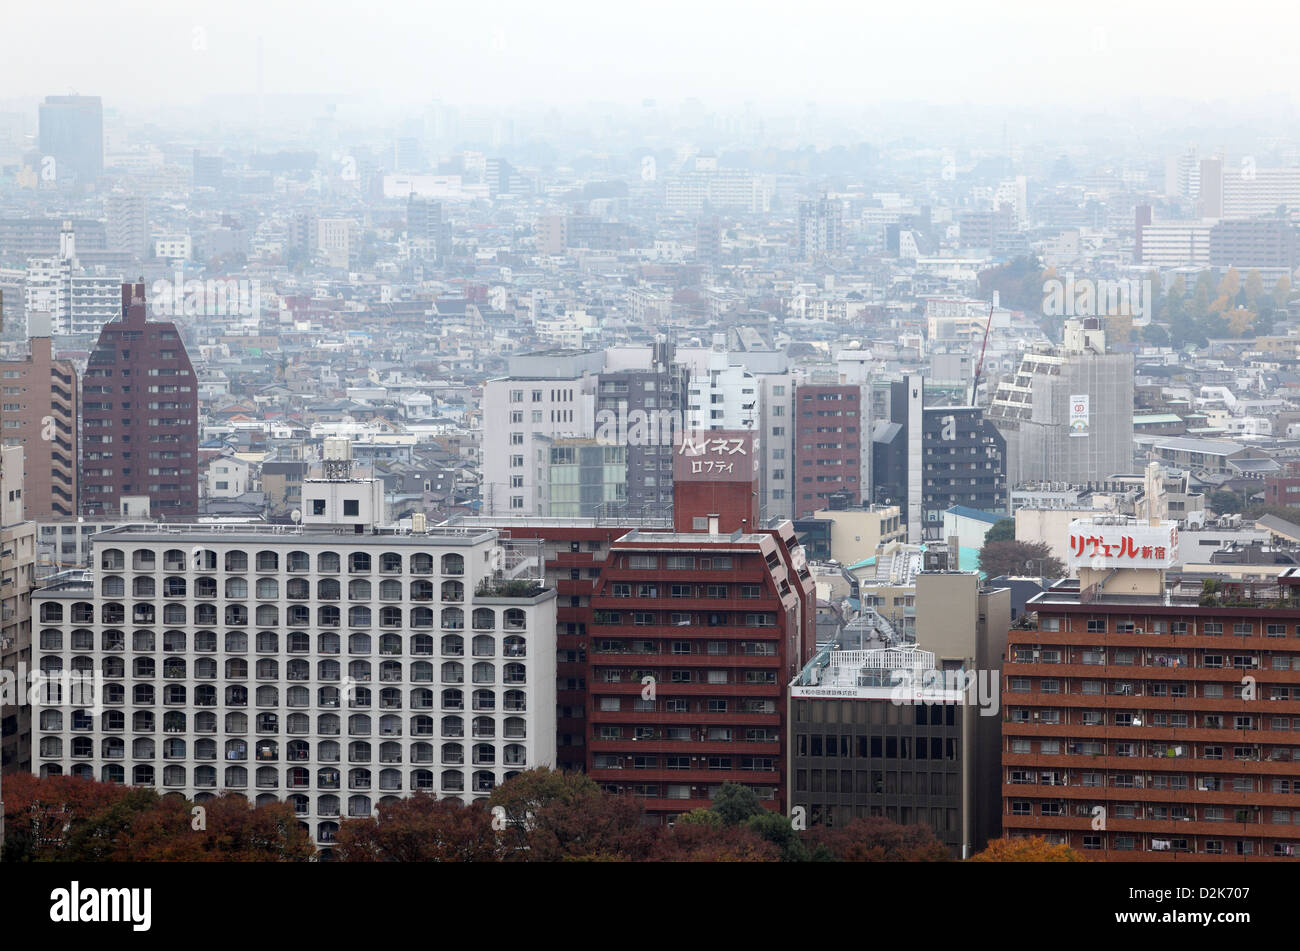 Tokyo, Japan, smog over the city Stock Photo